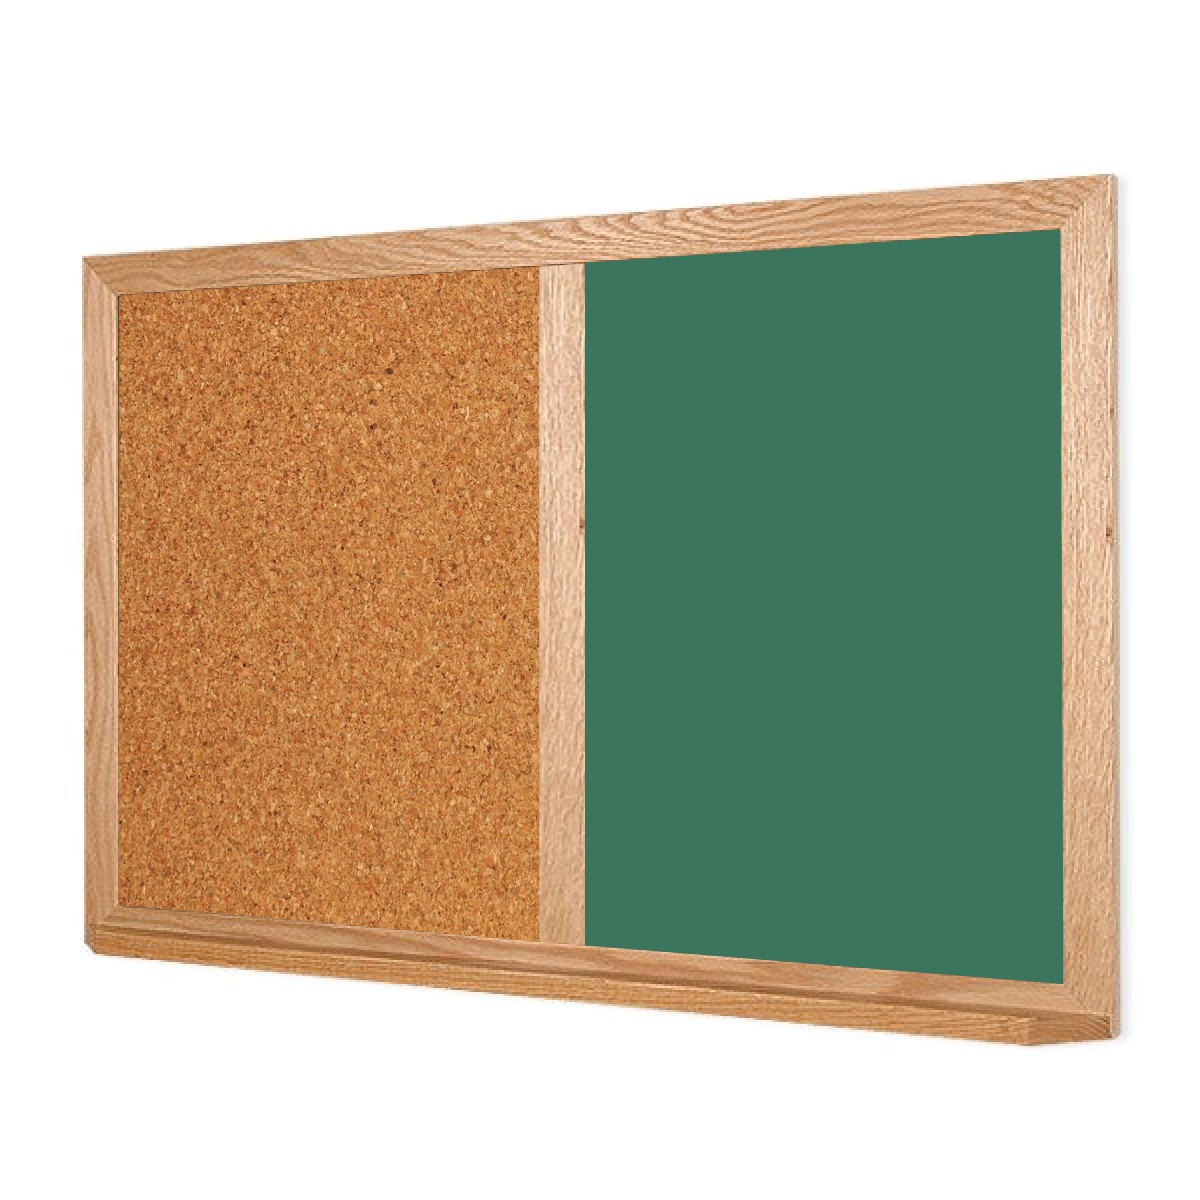 Wood Frame | Green Lam-Rite Landscape Chalkboard & Natural Cork